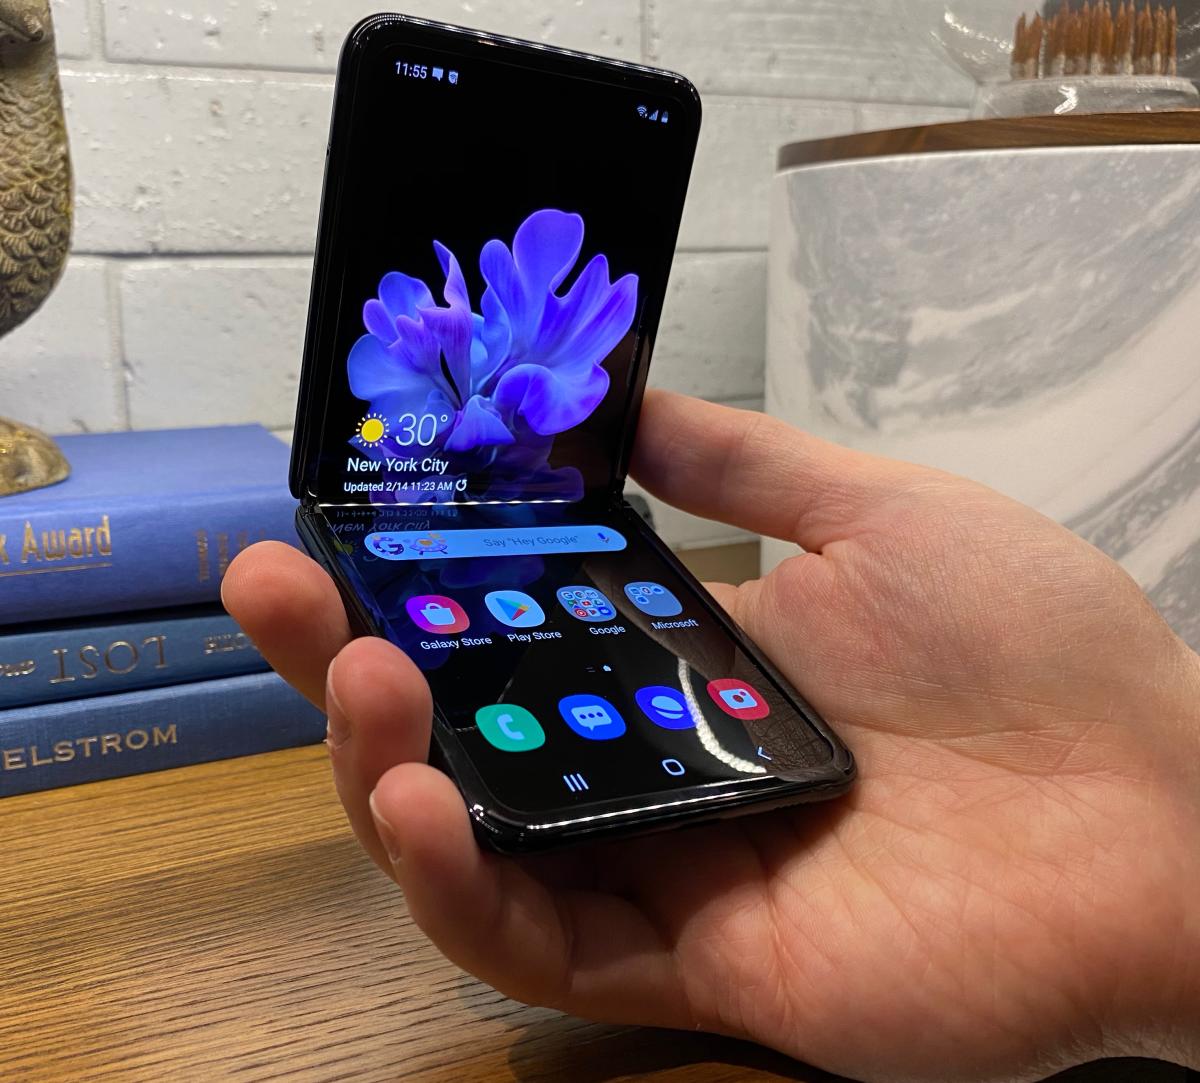 Samsung S Foldable Galaxy Z Flip Feels Like The Start Of A Revolution [video]